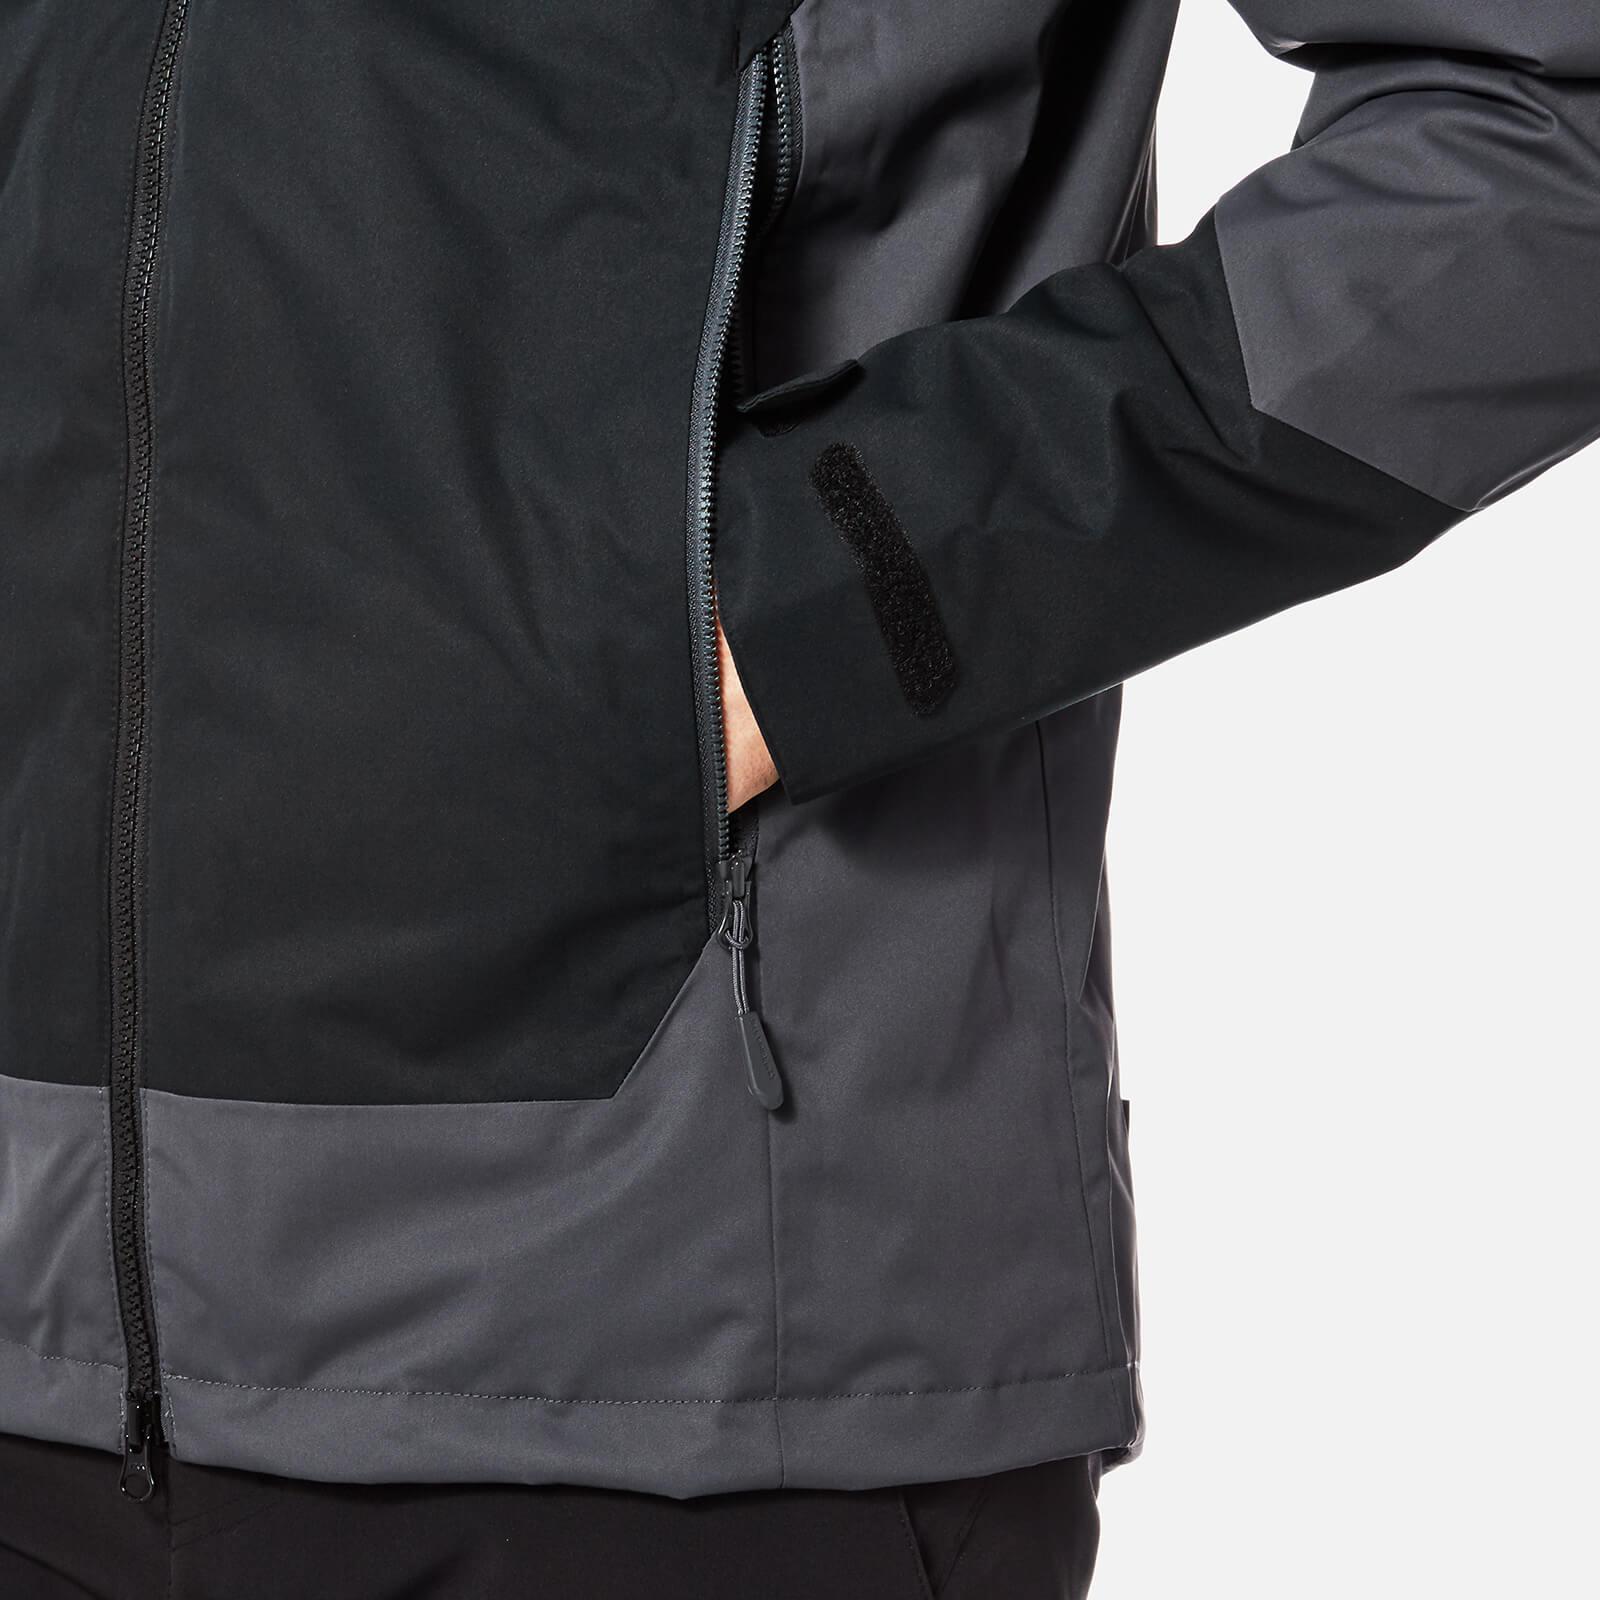 Jack Wolfskin Synthetic North Slope Jacket in Black for Men - Lyst